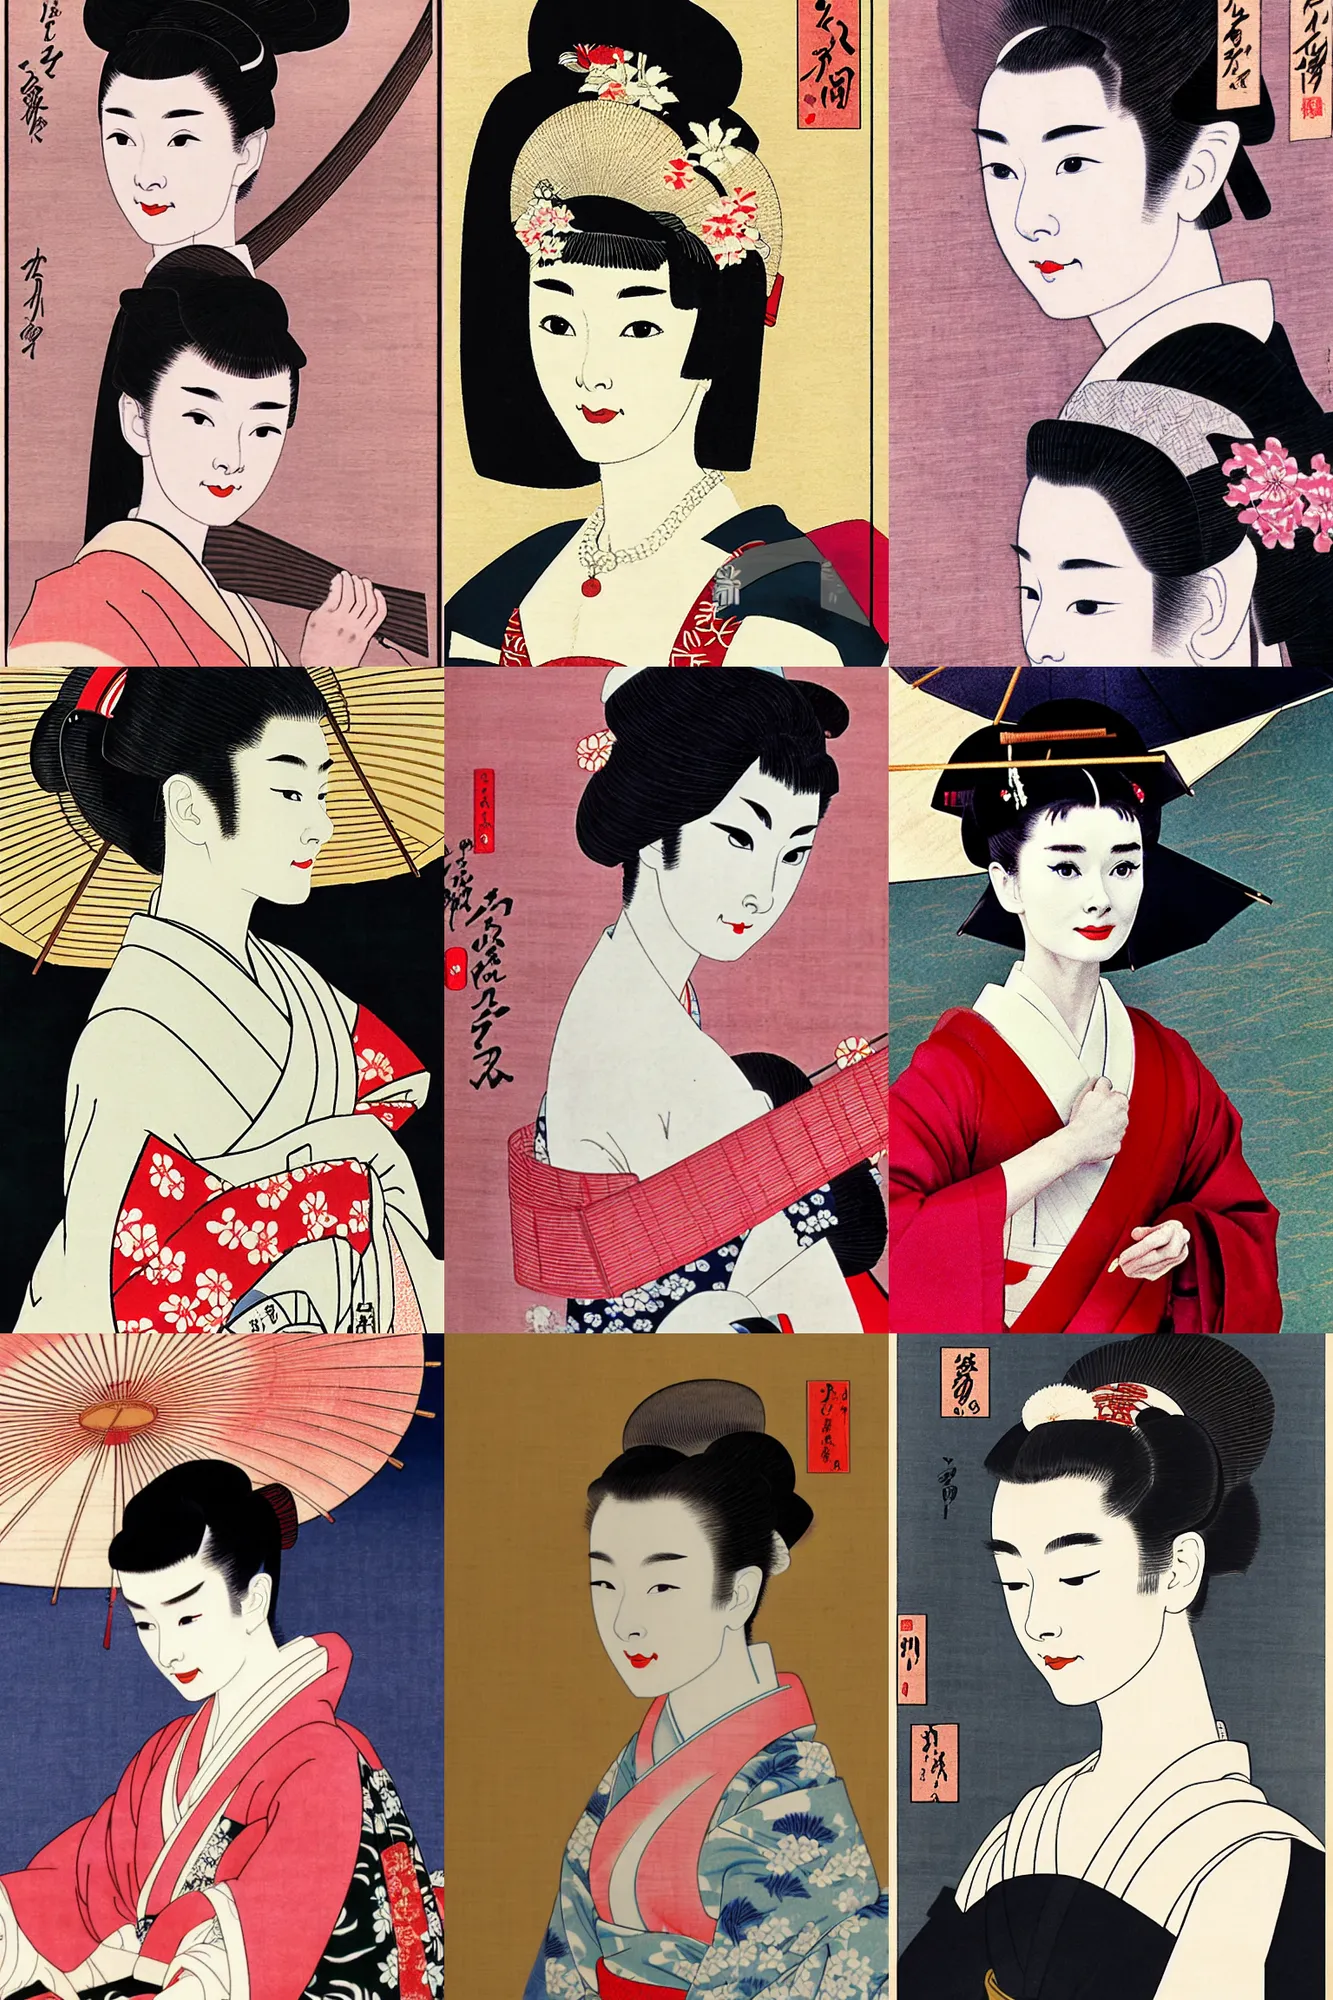 Prompt: young audrey hepburn as maiko in ukiyo - e art, by shimura tatsumi, ultra detailed, 4 k, photo real